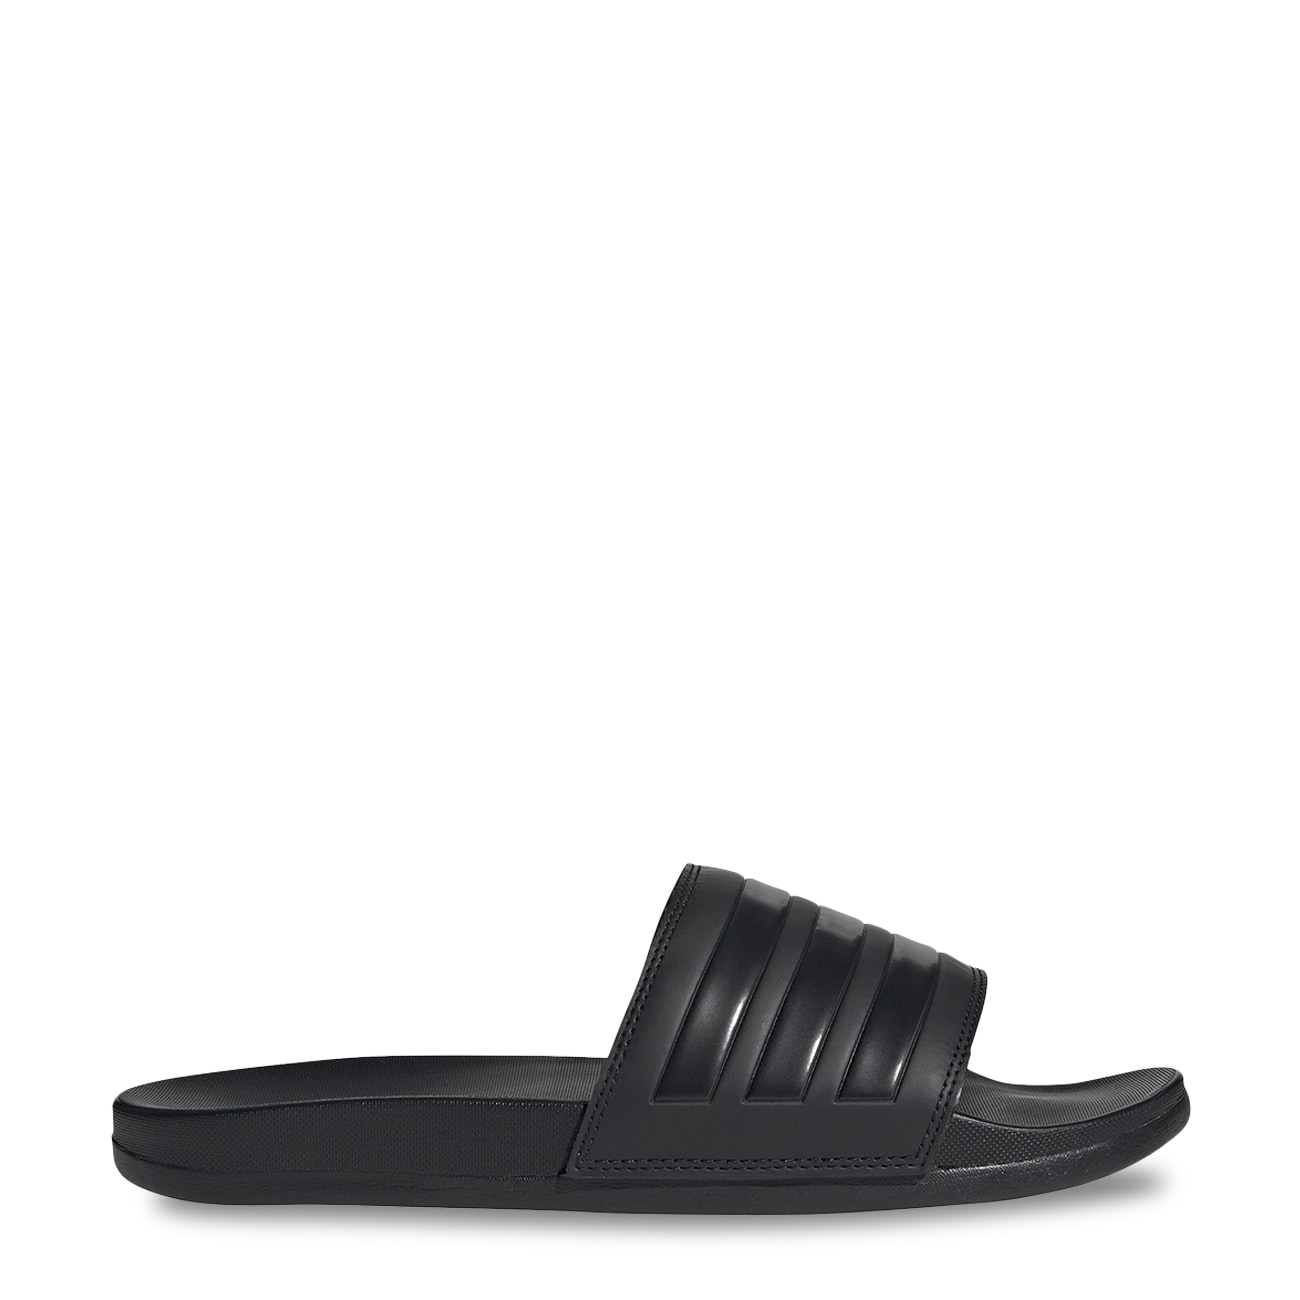 Adidas Unisex Adilette Comfort Slide Sandal | The Shoe Company